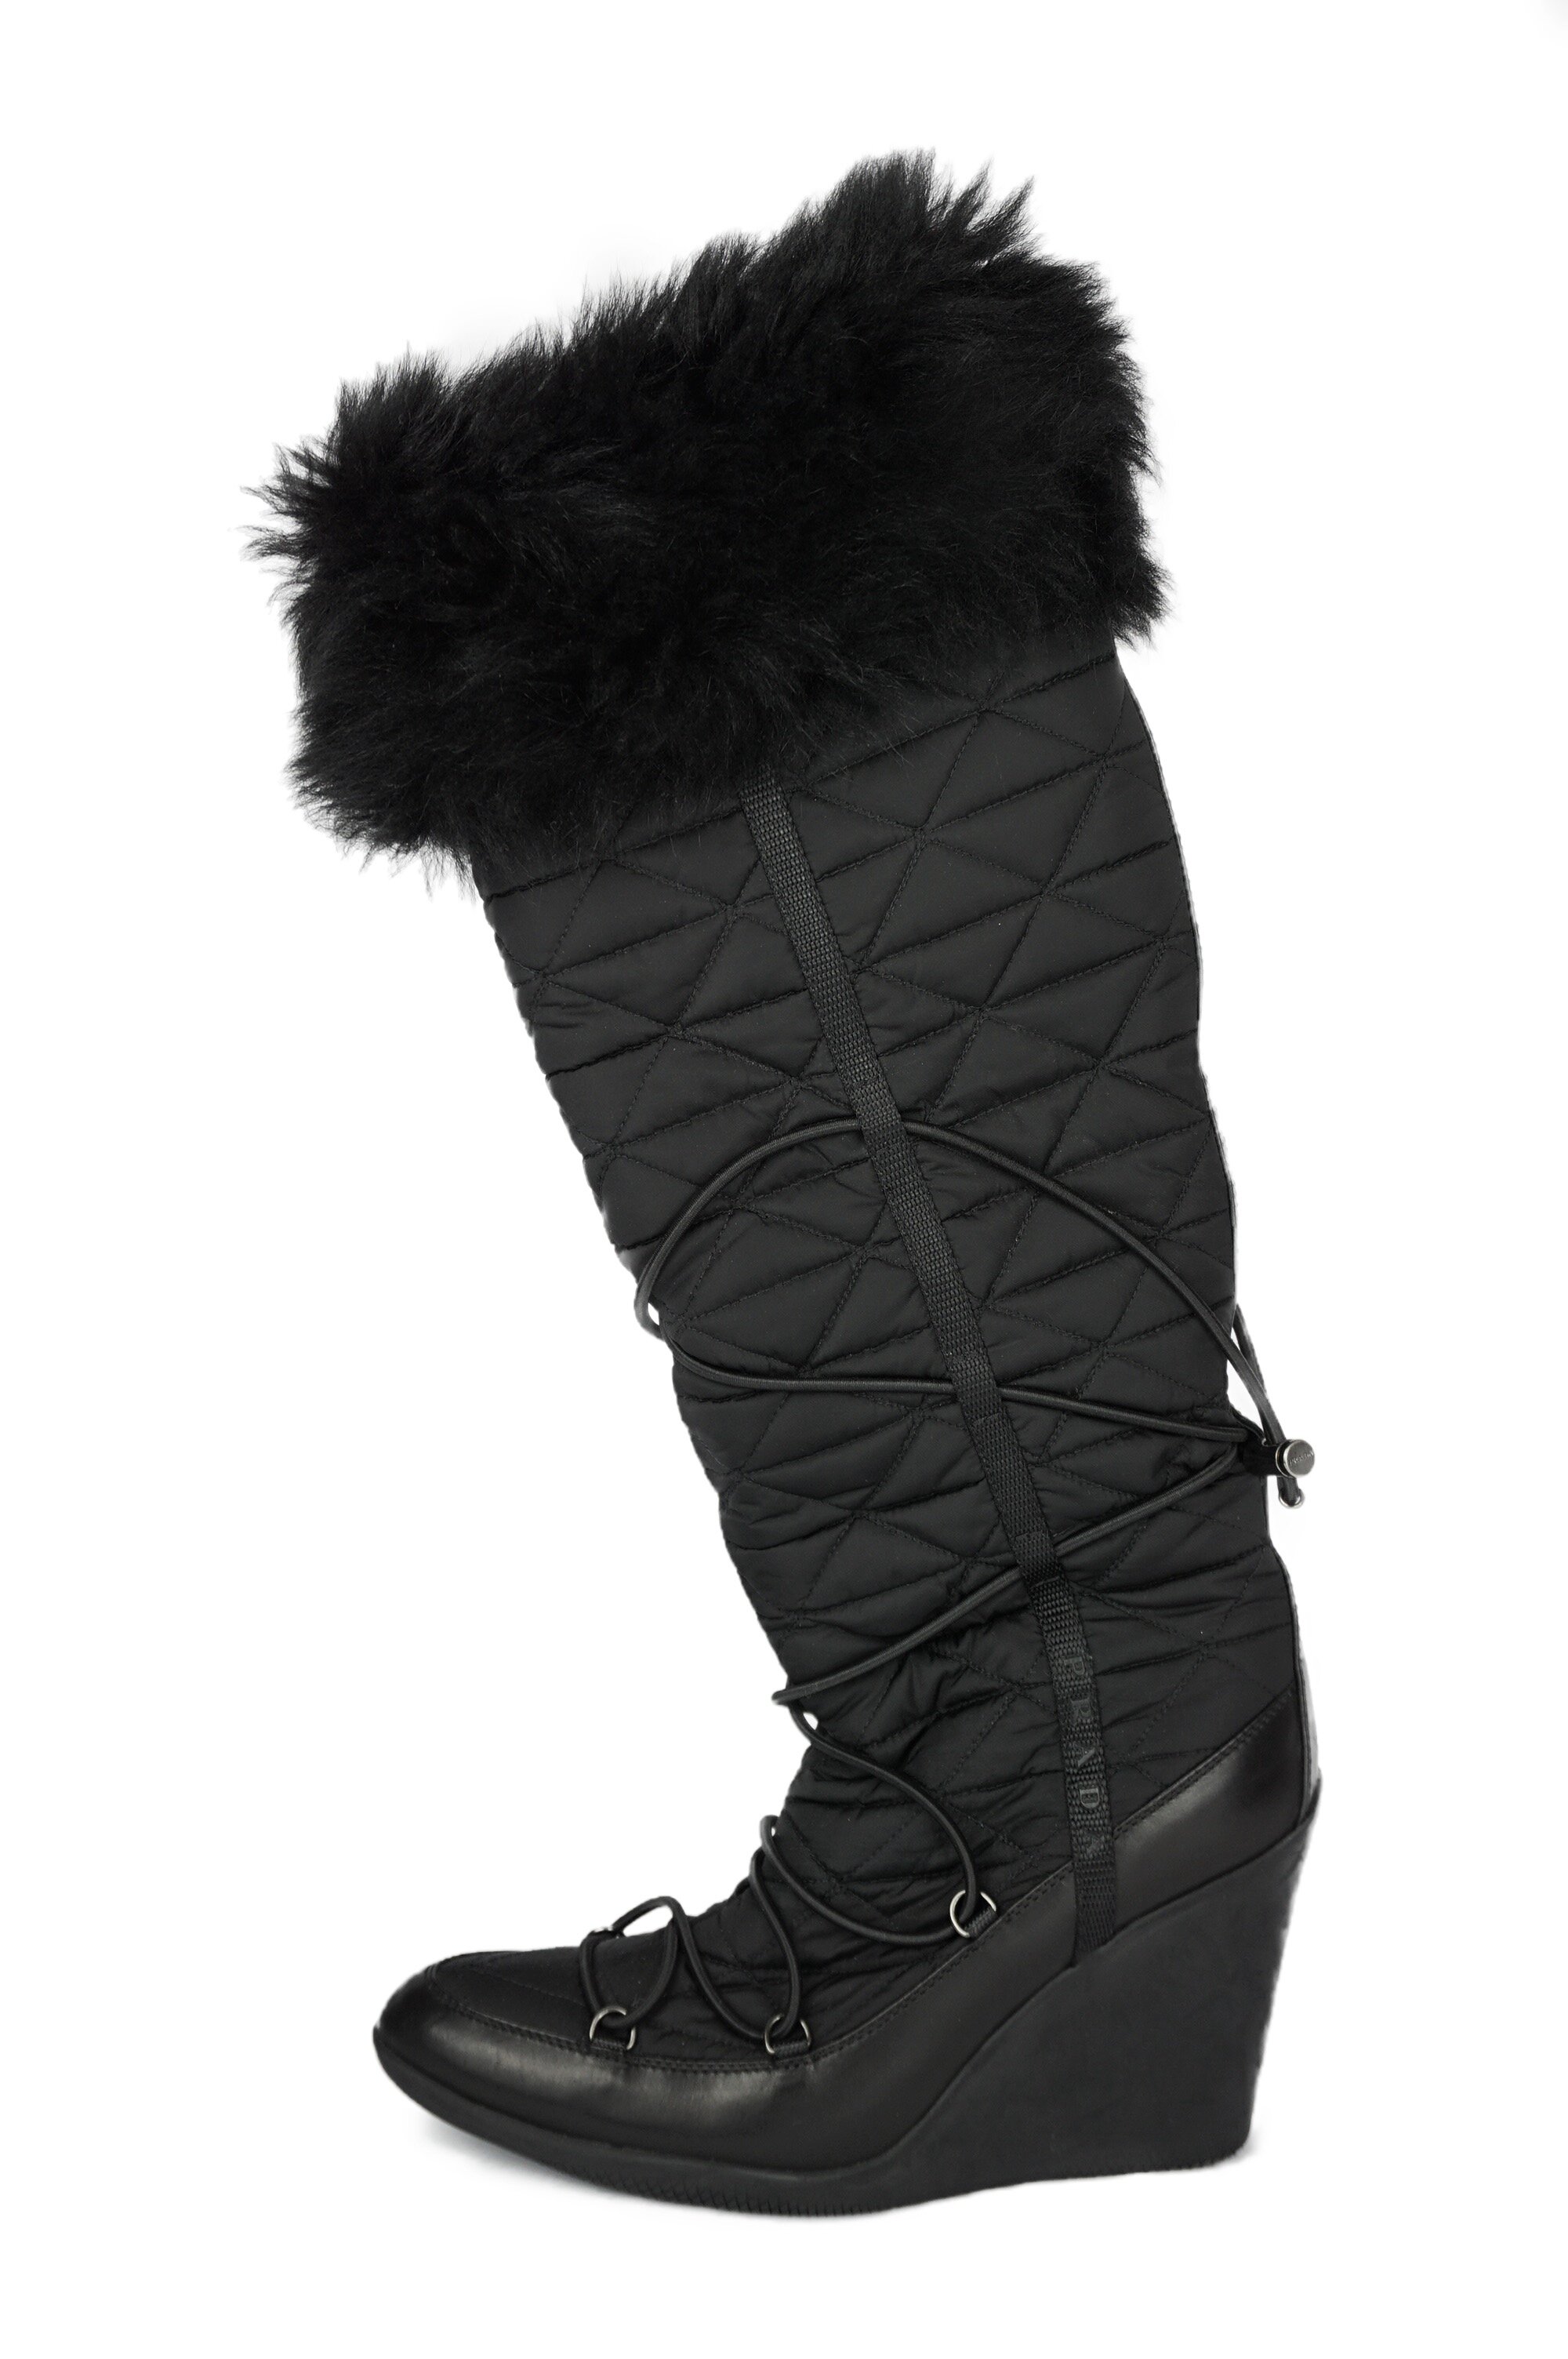 prada winter boots